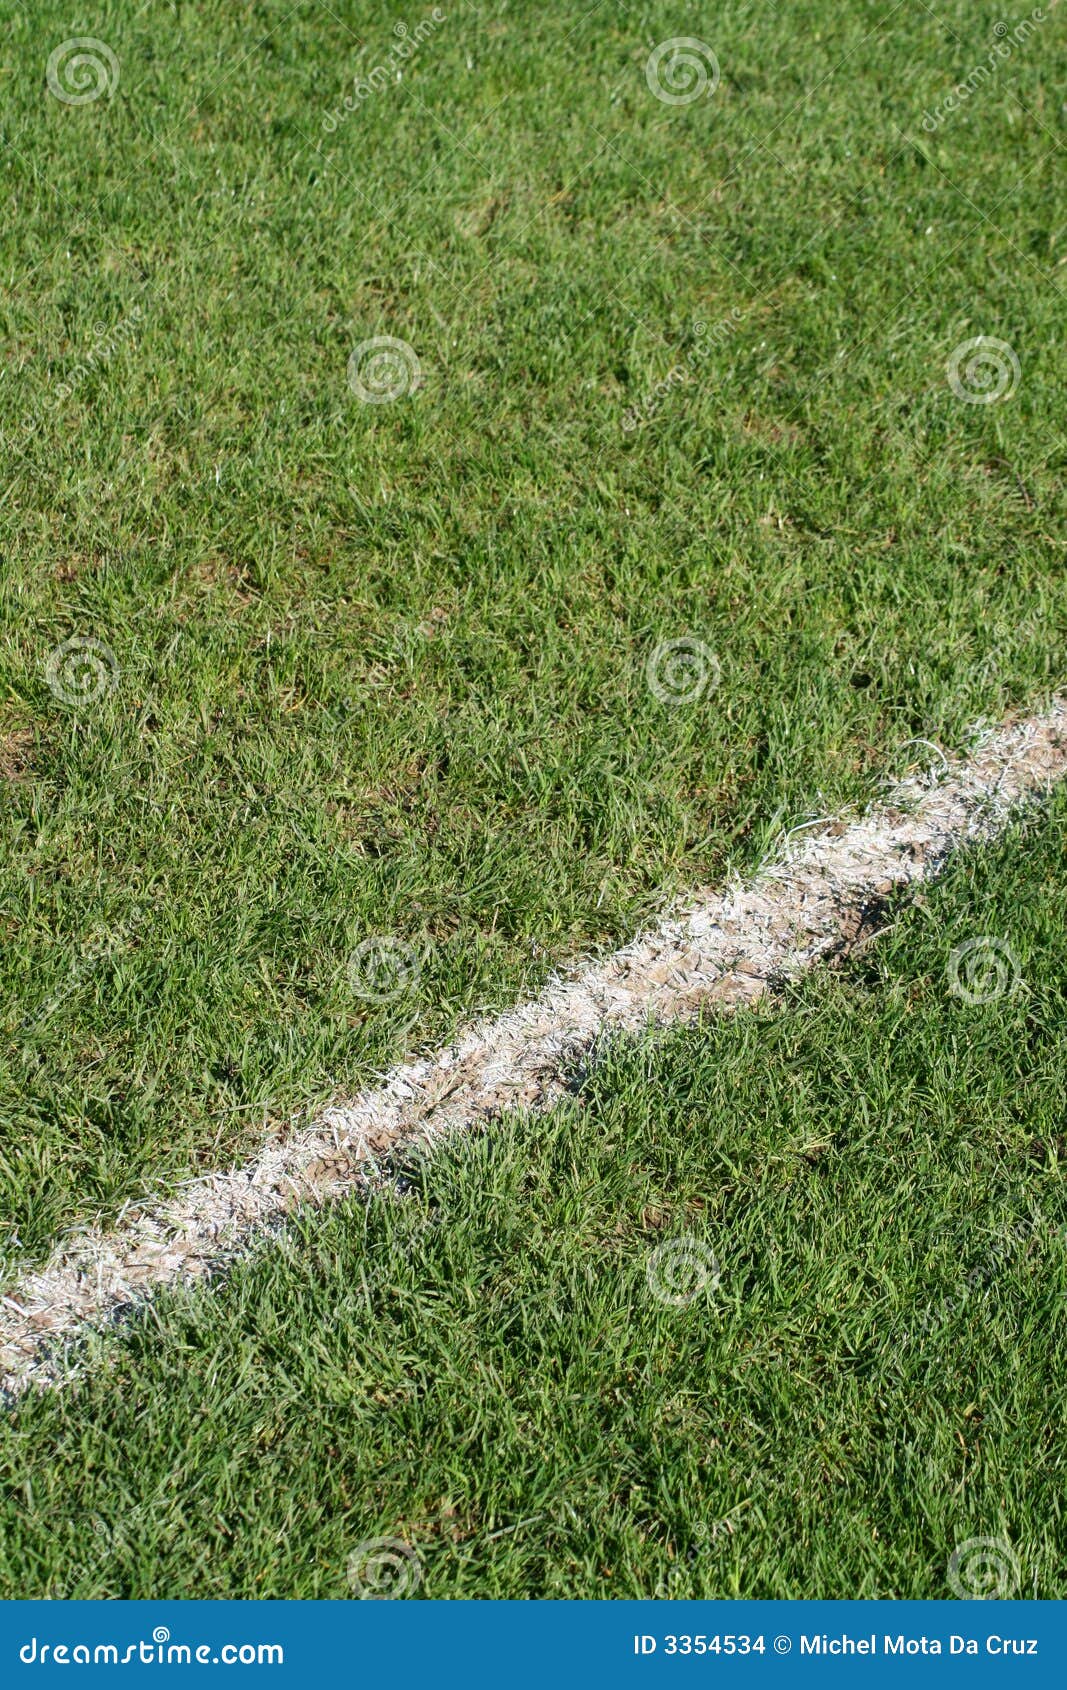 boundary line soccer field